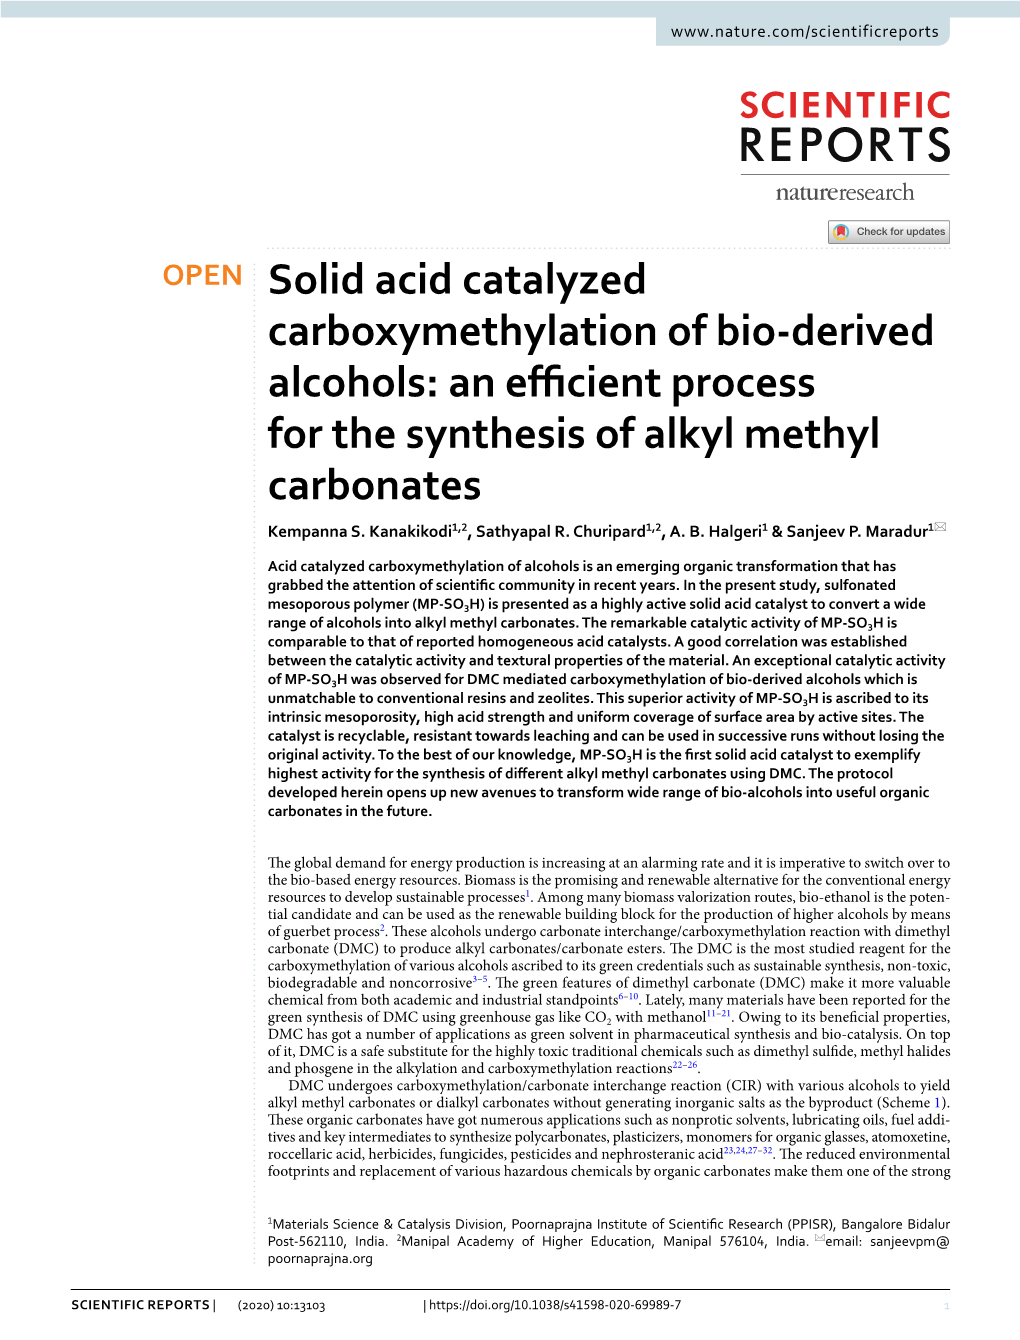 Solid Acid Catalyzed Carboxymethylation of Bio-Derived